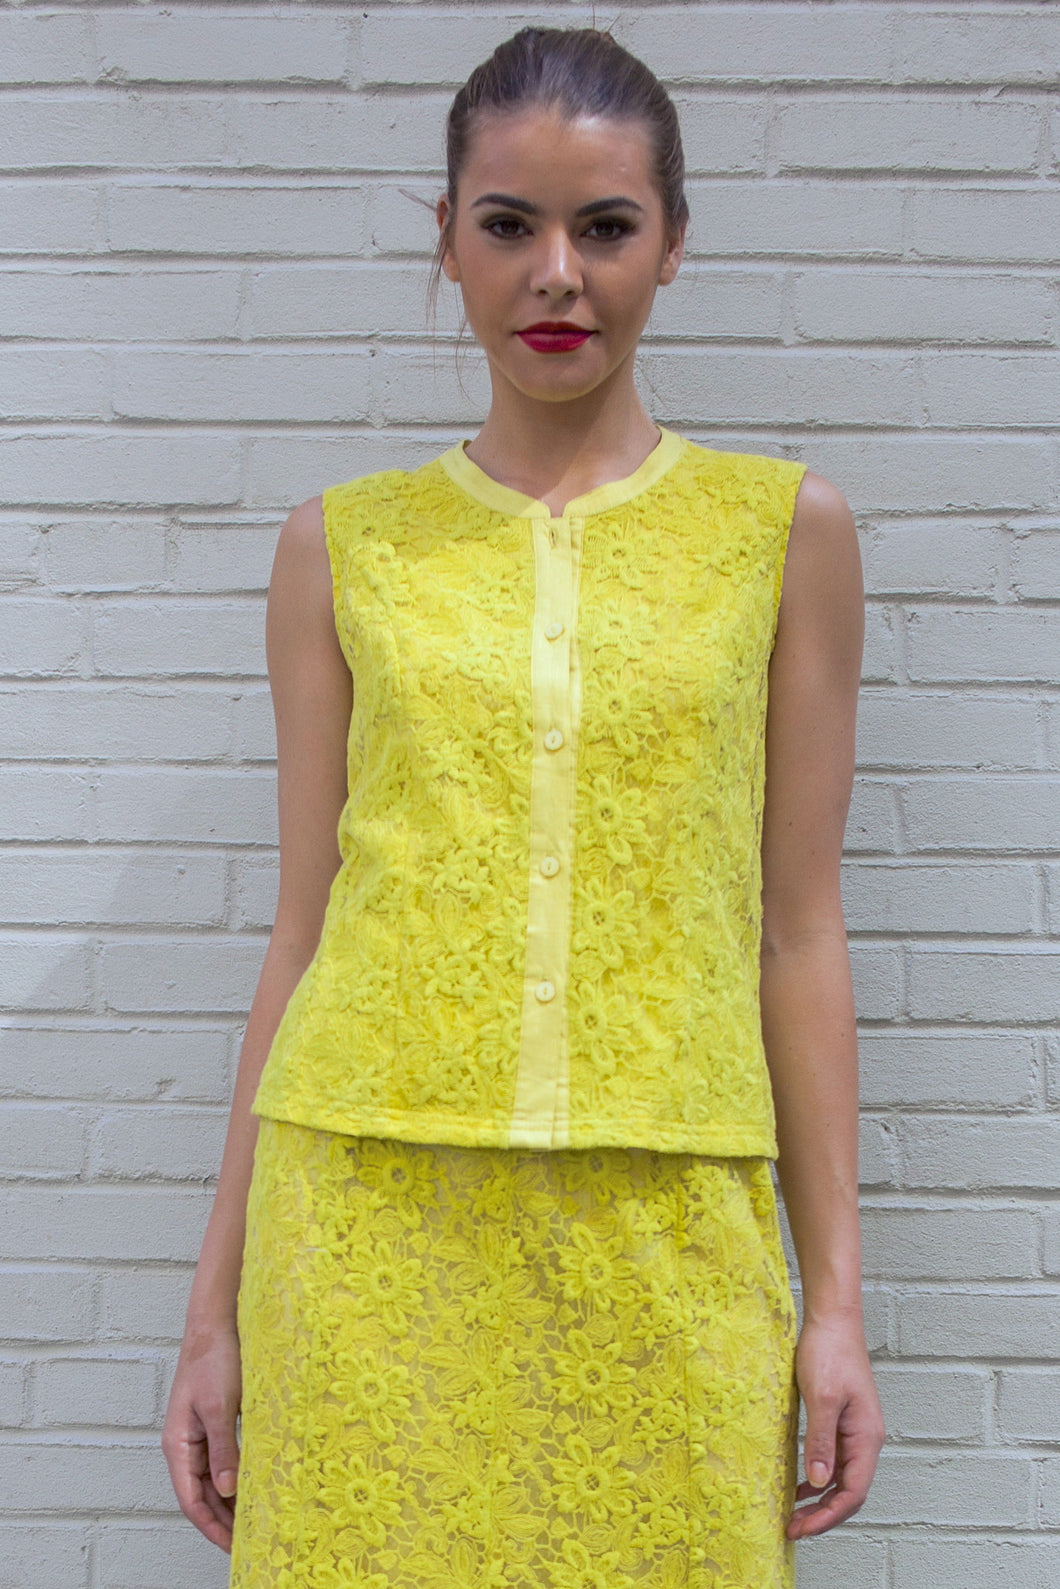 Embroidered Floral Lace Vest (Citrus) Style # 1233